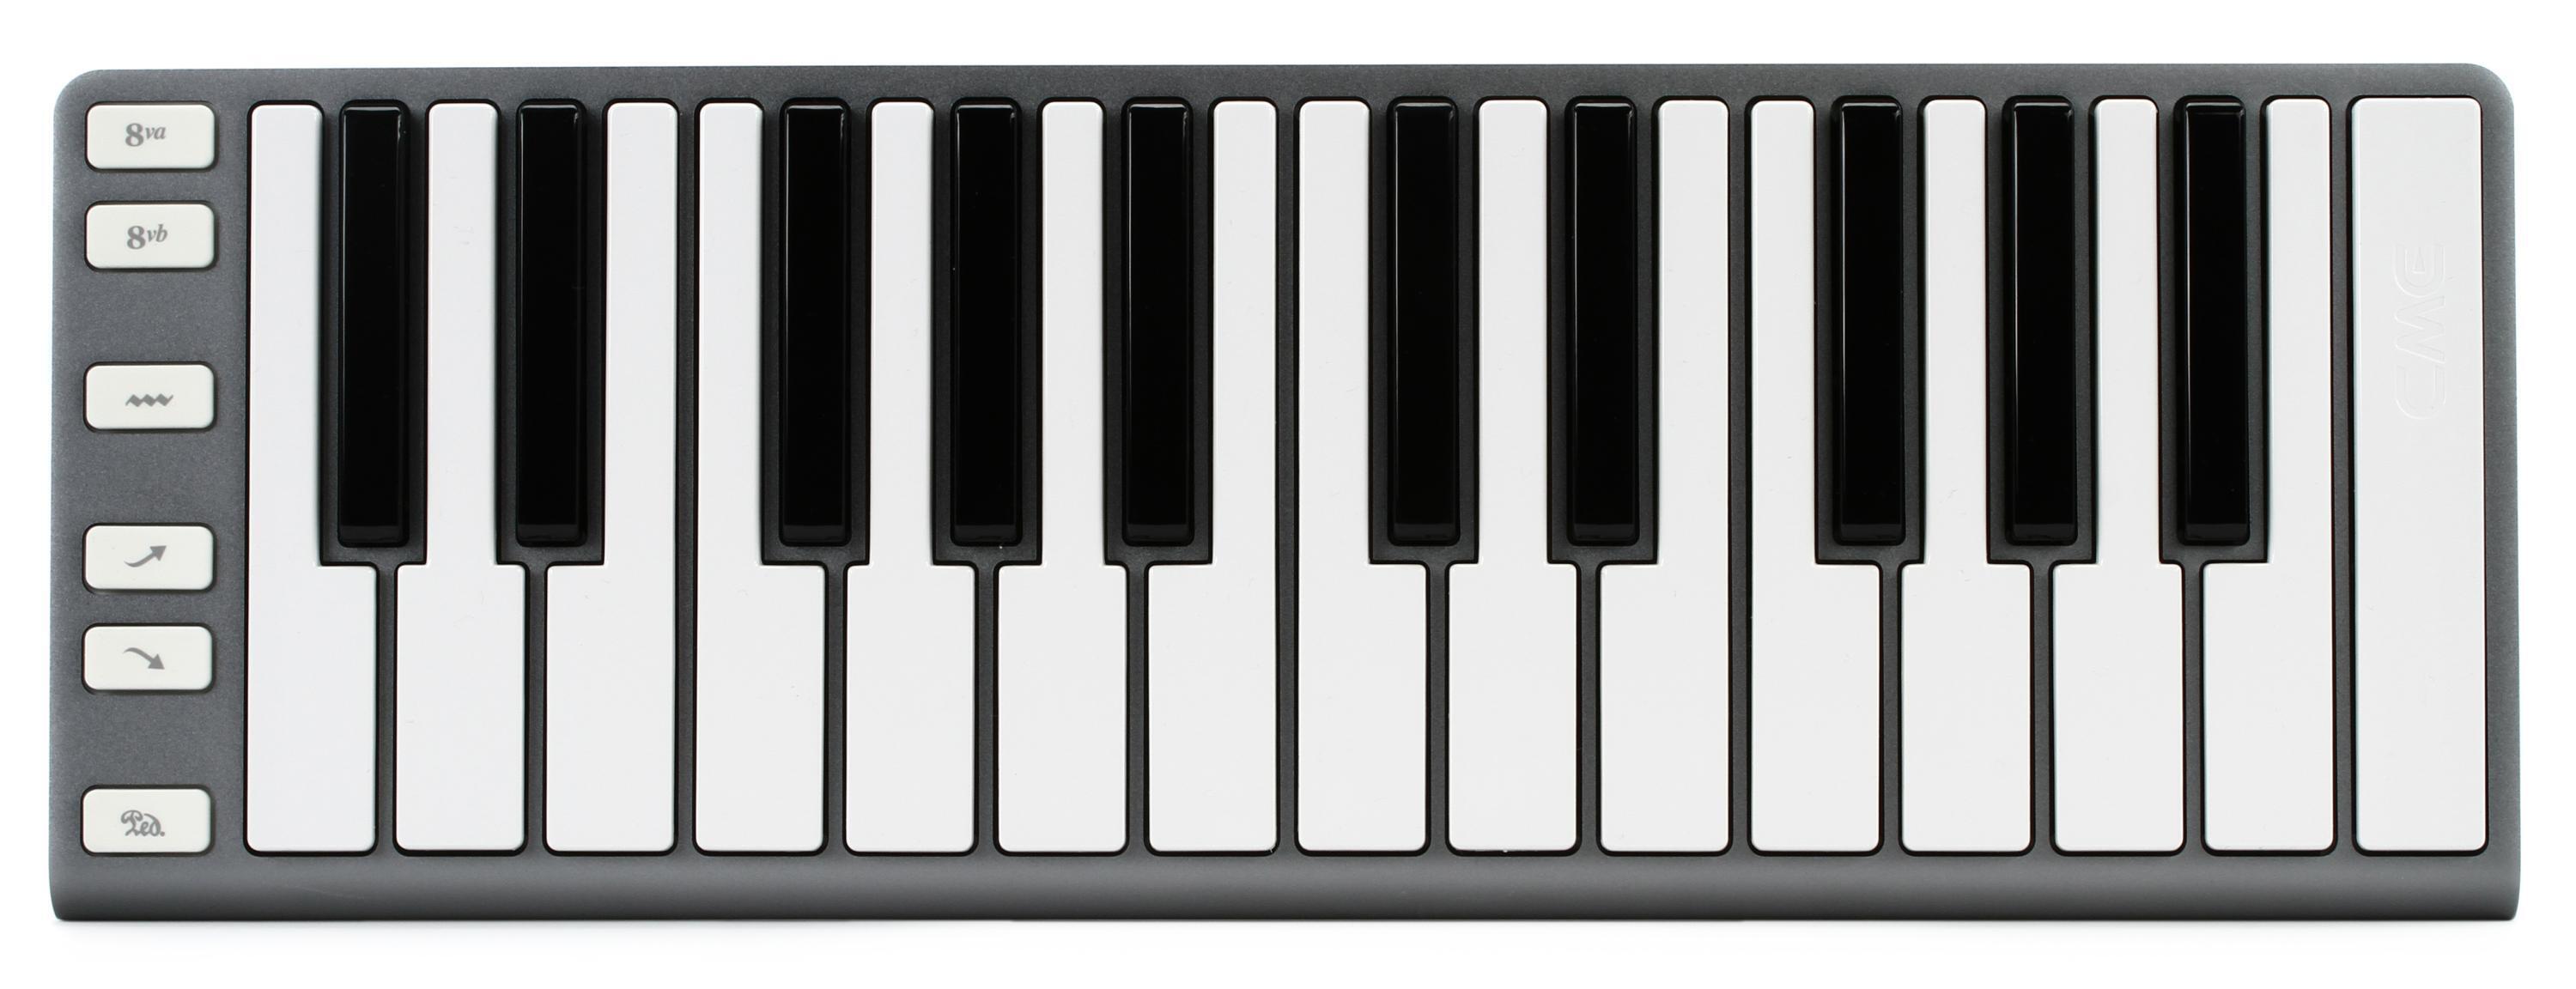 CME Xkey 25-key Mobile Keyboard Controller - Space Gray